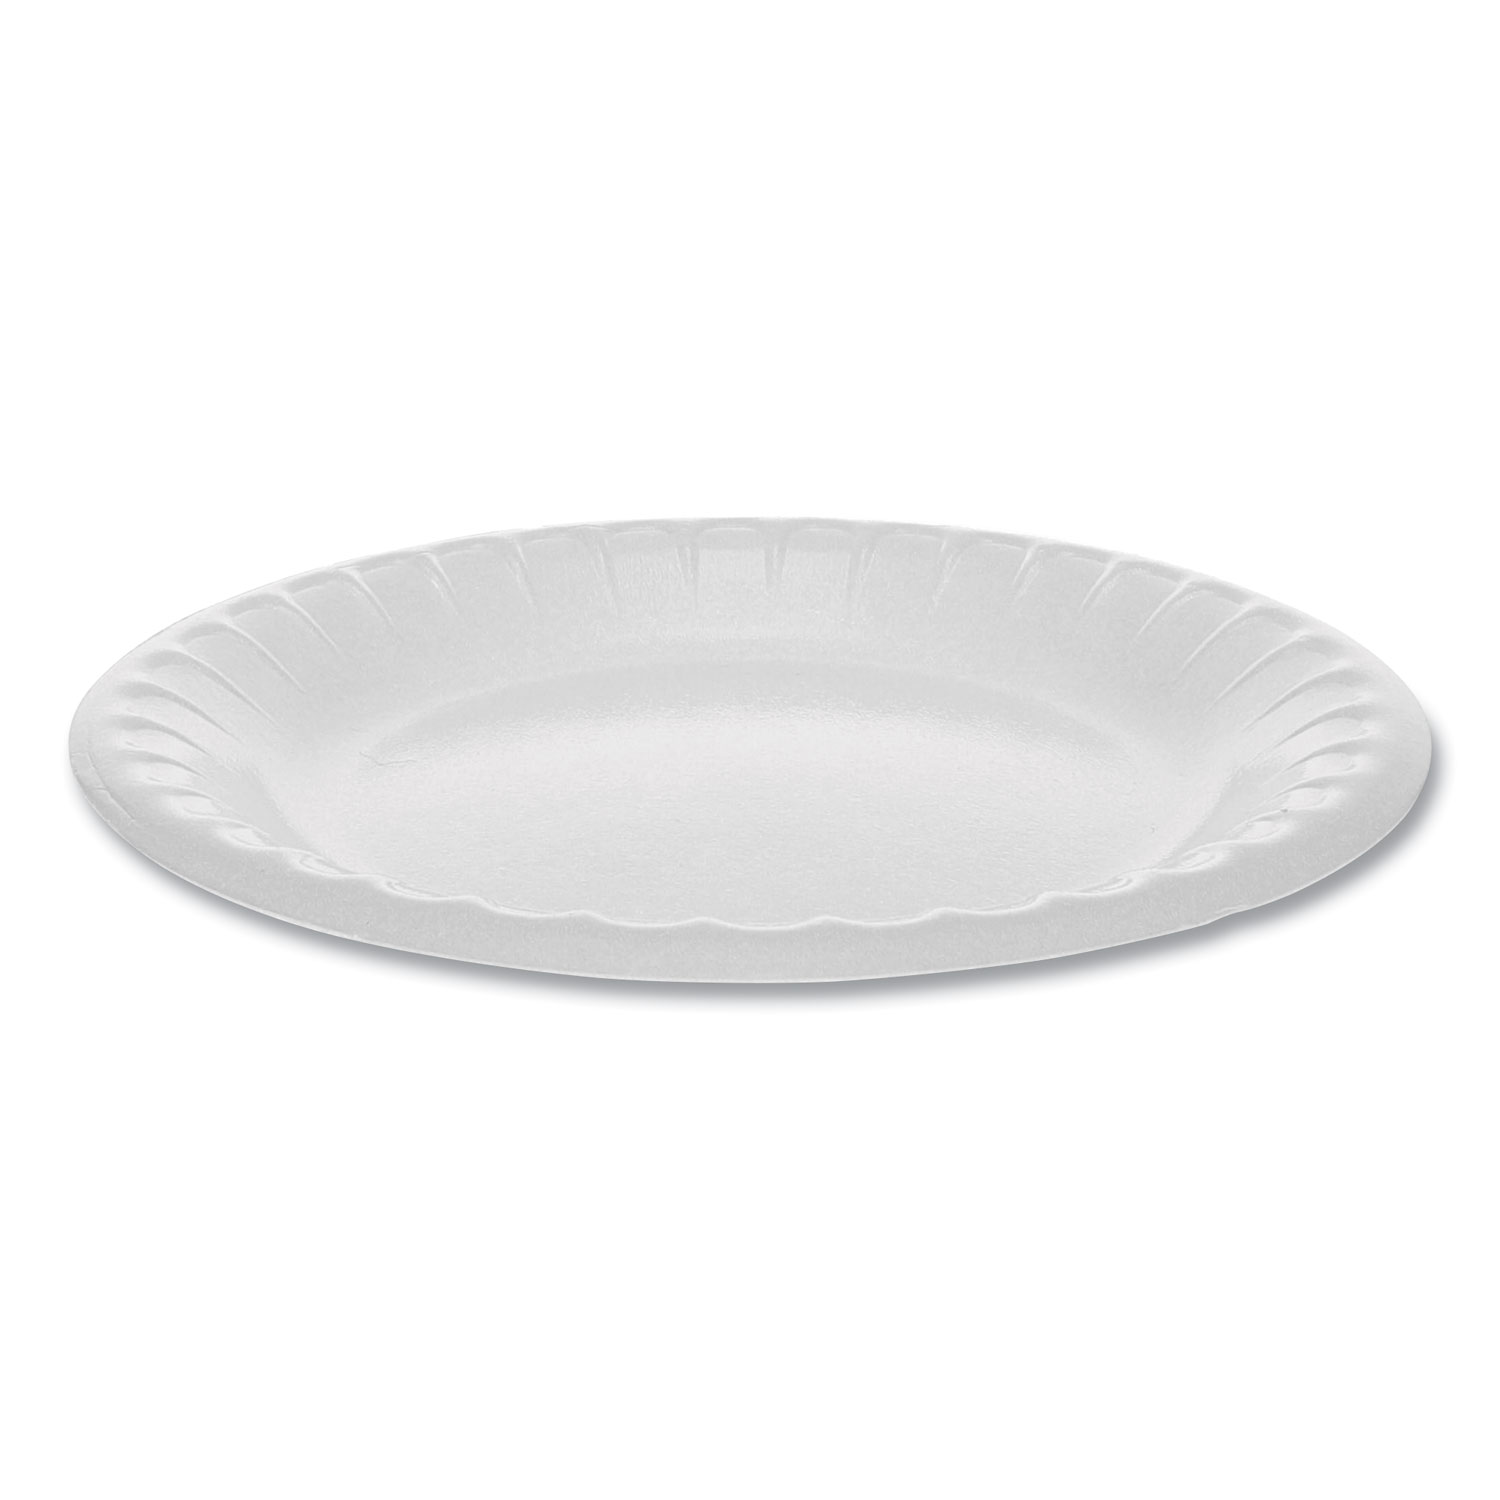  Pactiv 0TK100060000 Laminated Foam Dinnerware, Plate, 6 Diameter, White, 1,000/Carton (PCT0TK100060000) 